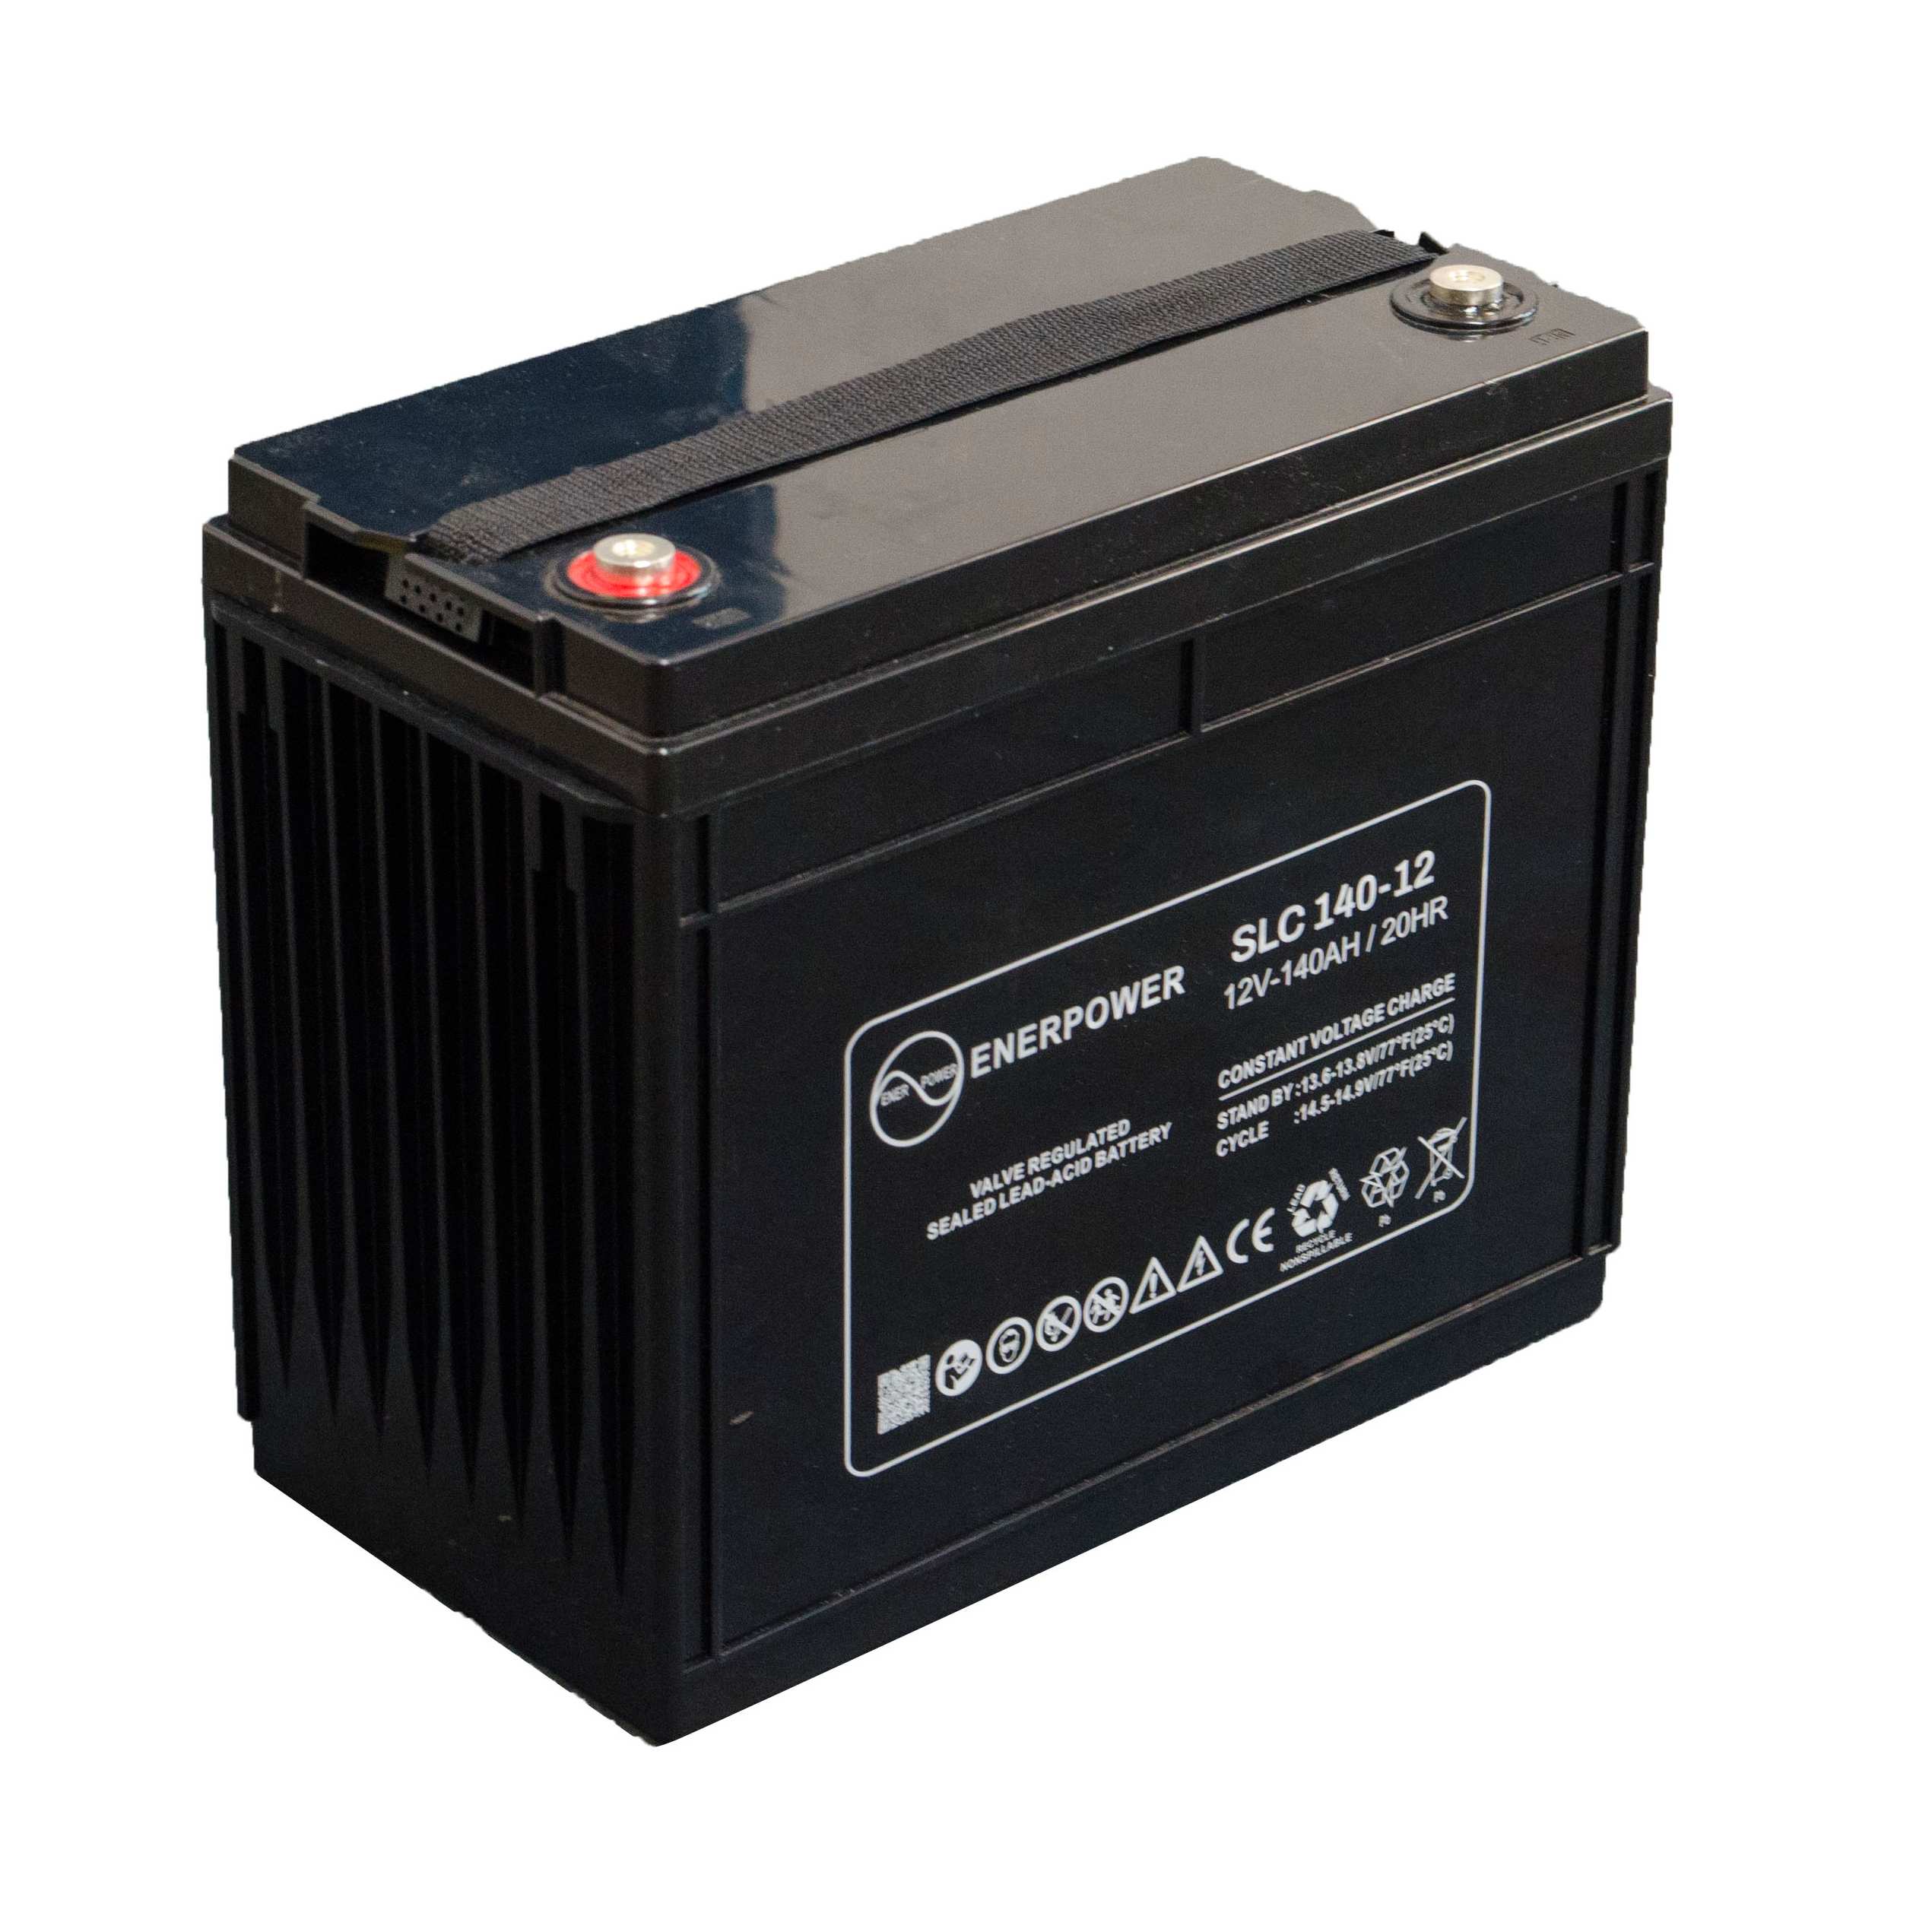 SLC 140-12 12V 140Ah AGM ENERPOWER battery